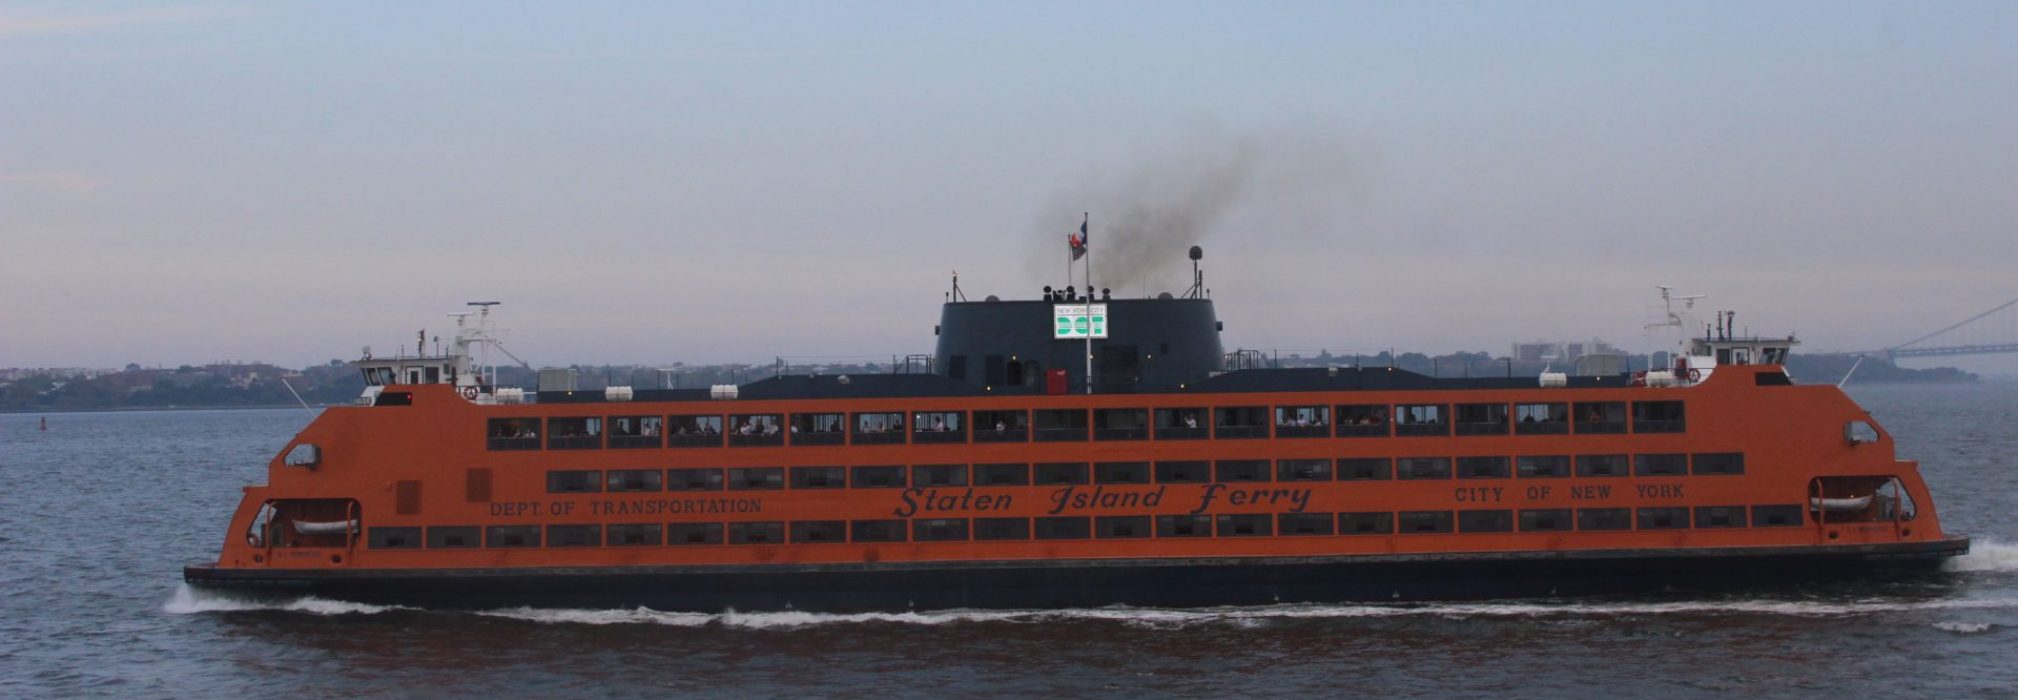 ferry staten bonne image